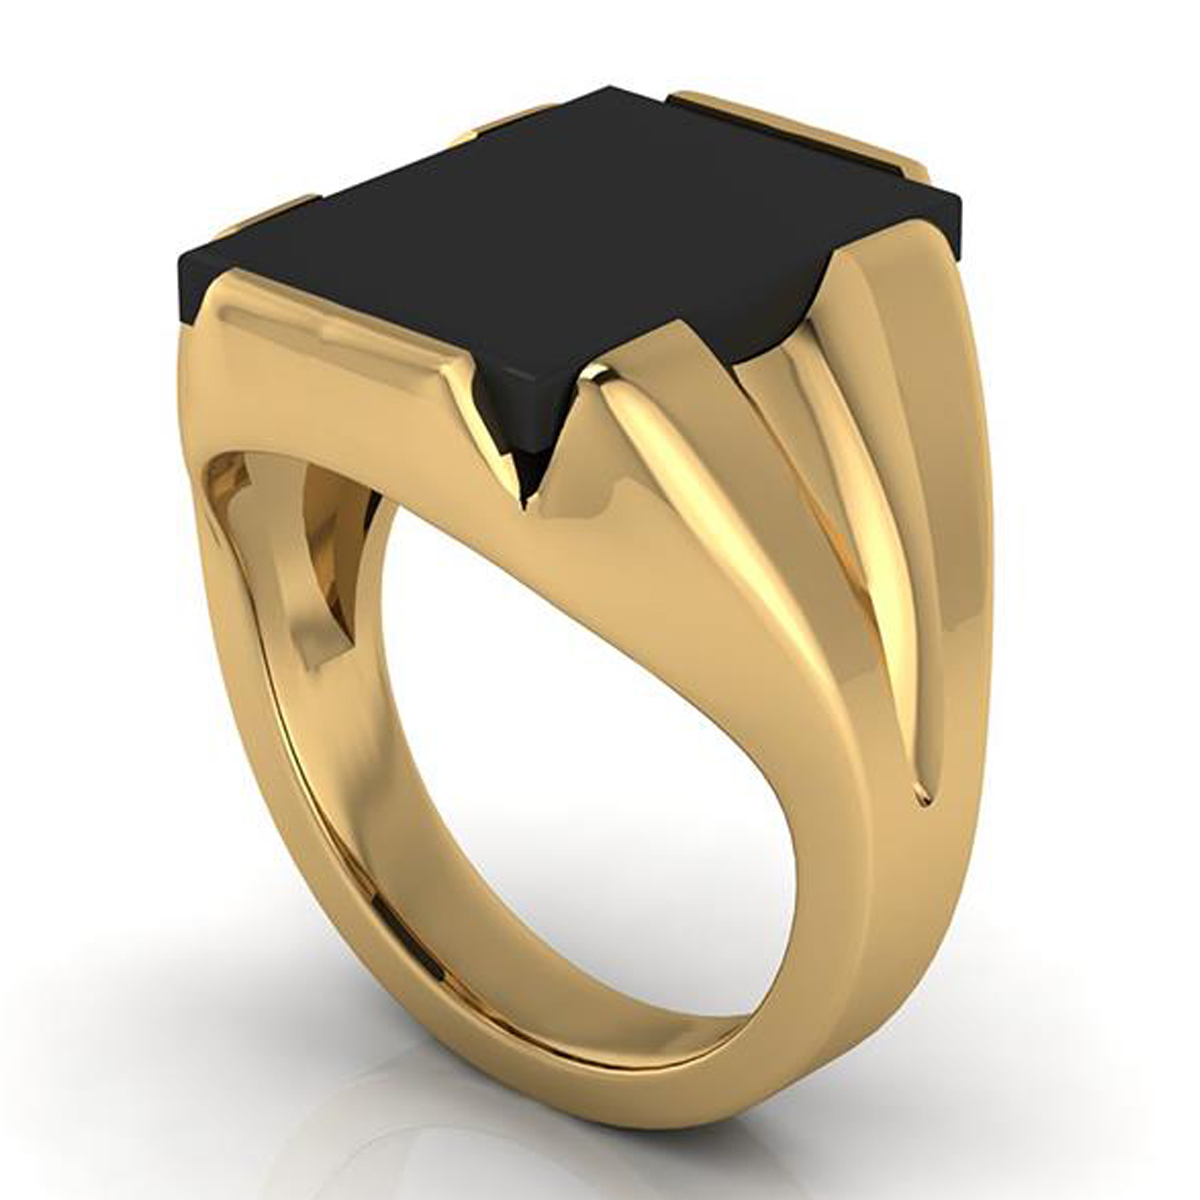 Men's Art Deco Etched Diamond Ring